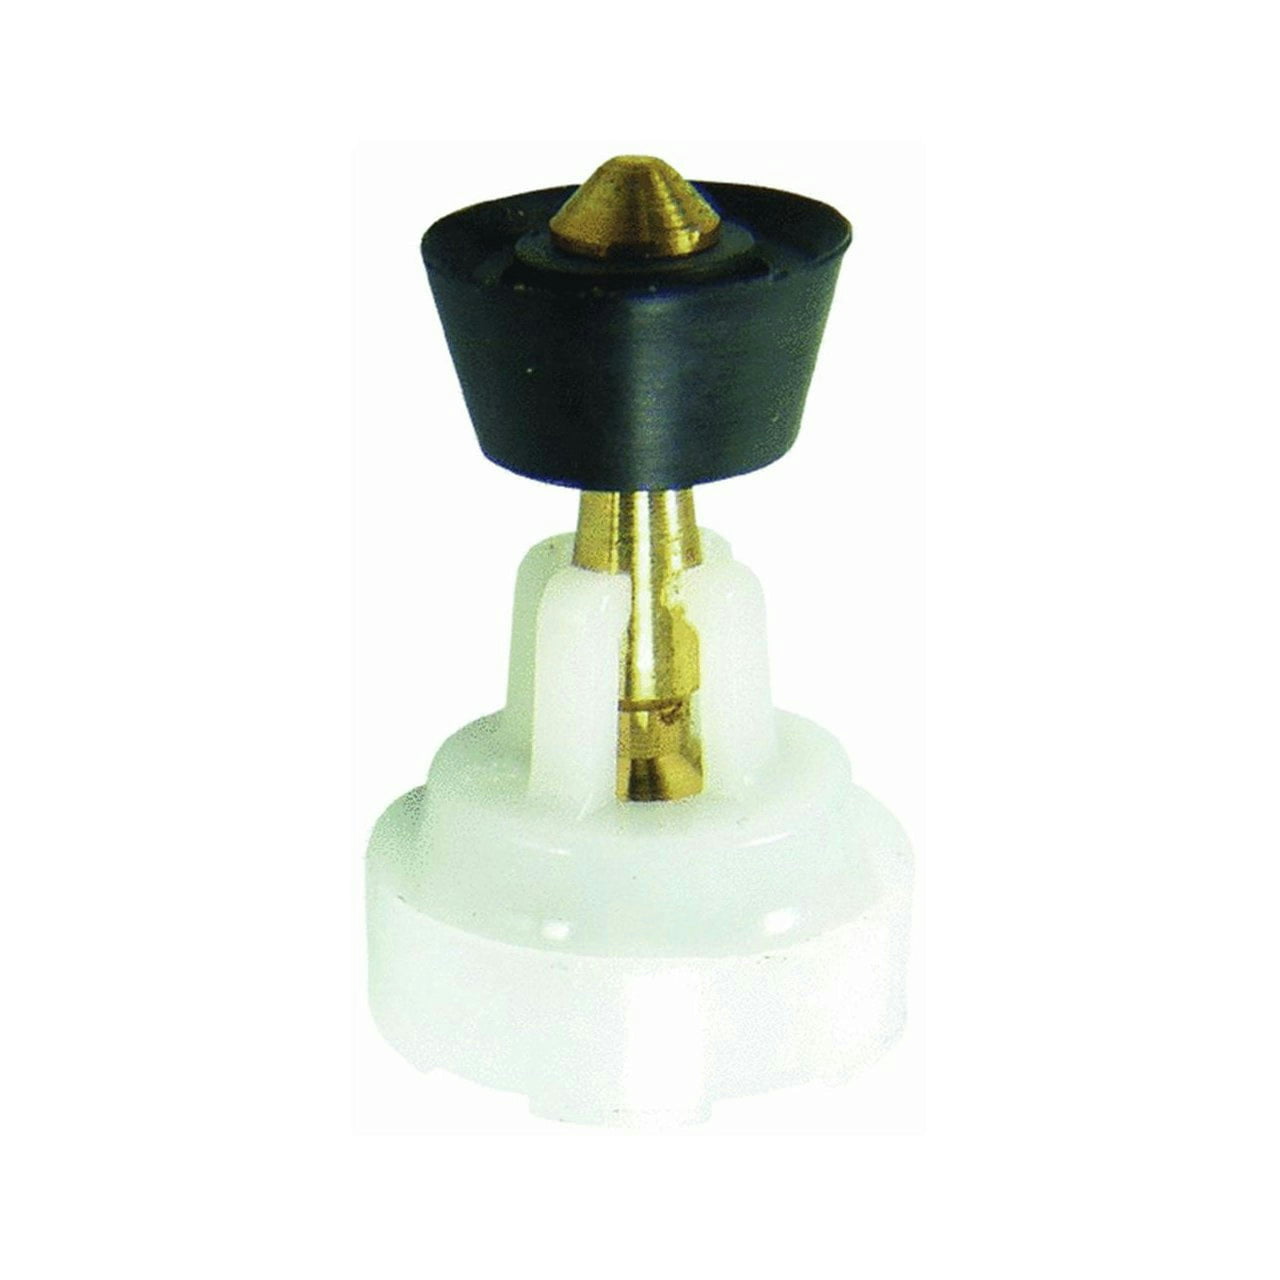 Danco 36208 Kitchen Faucet Spray Diverter for Delta/Sterling/Speakman/Valley